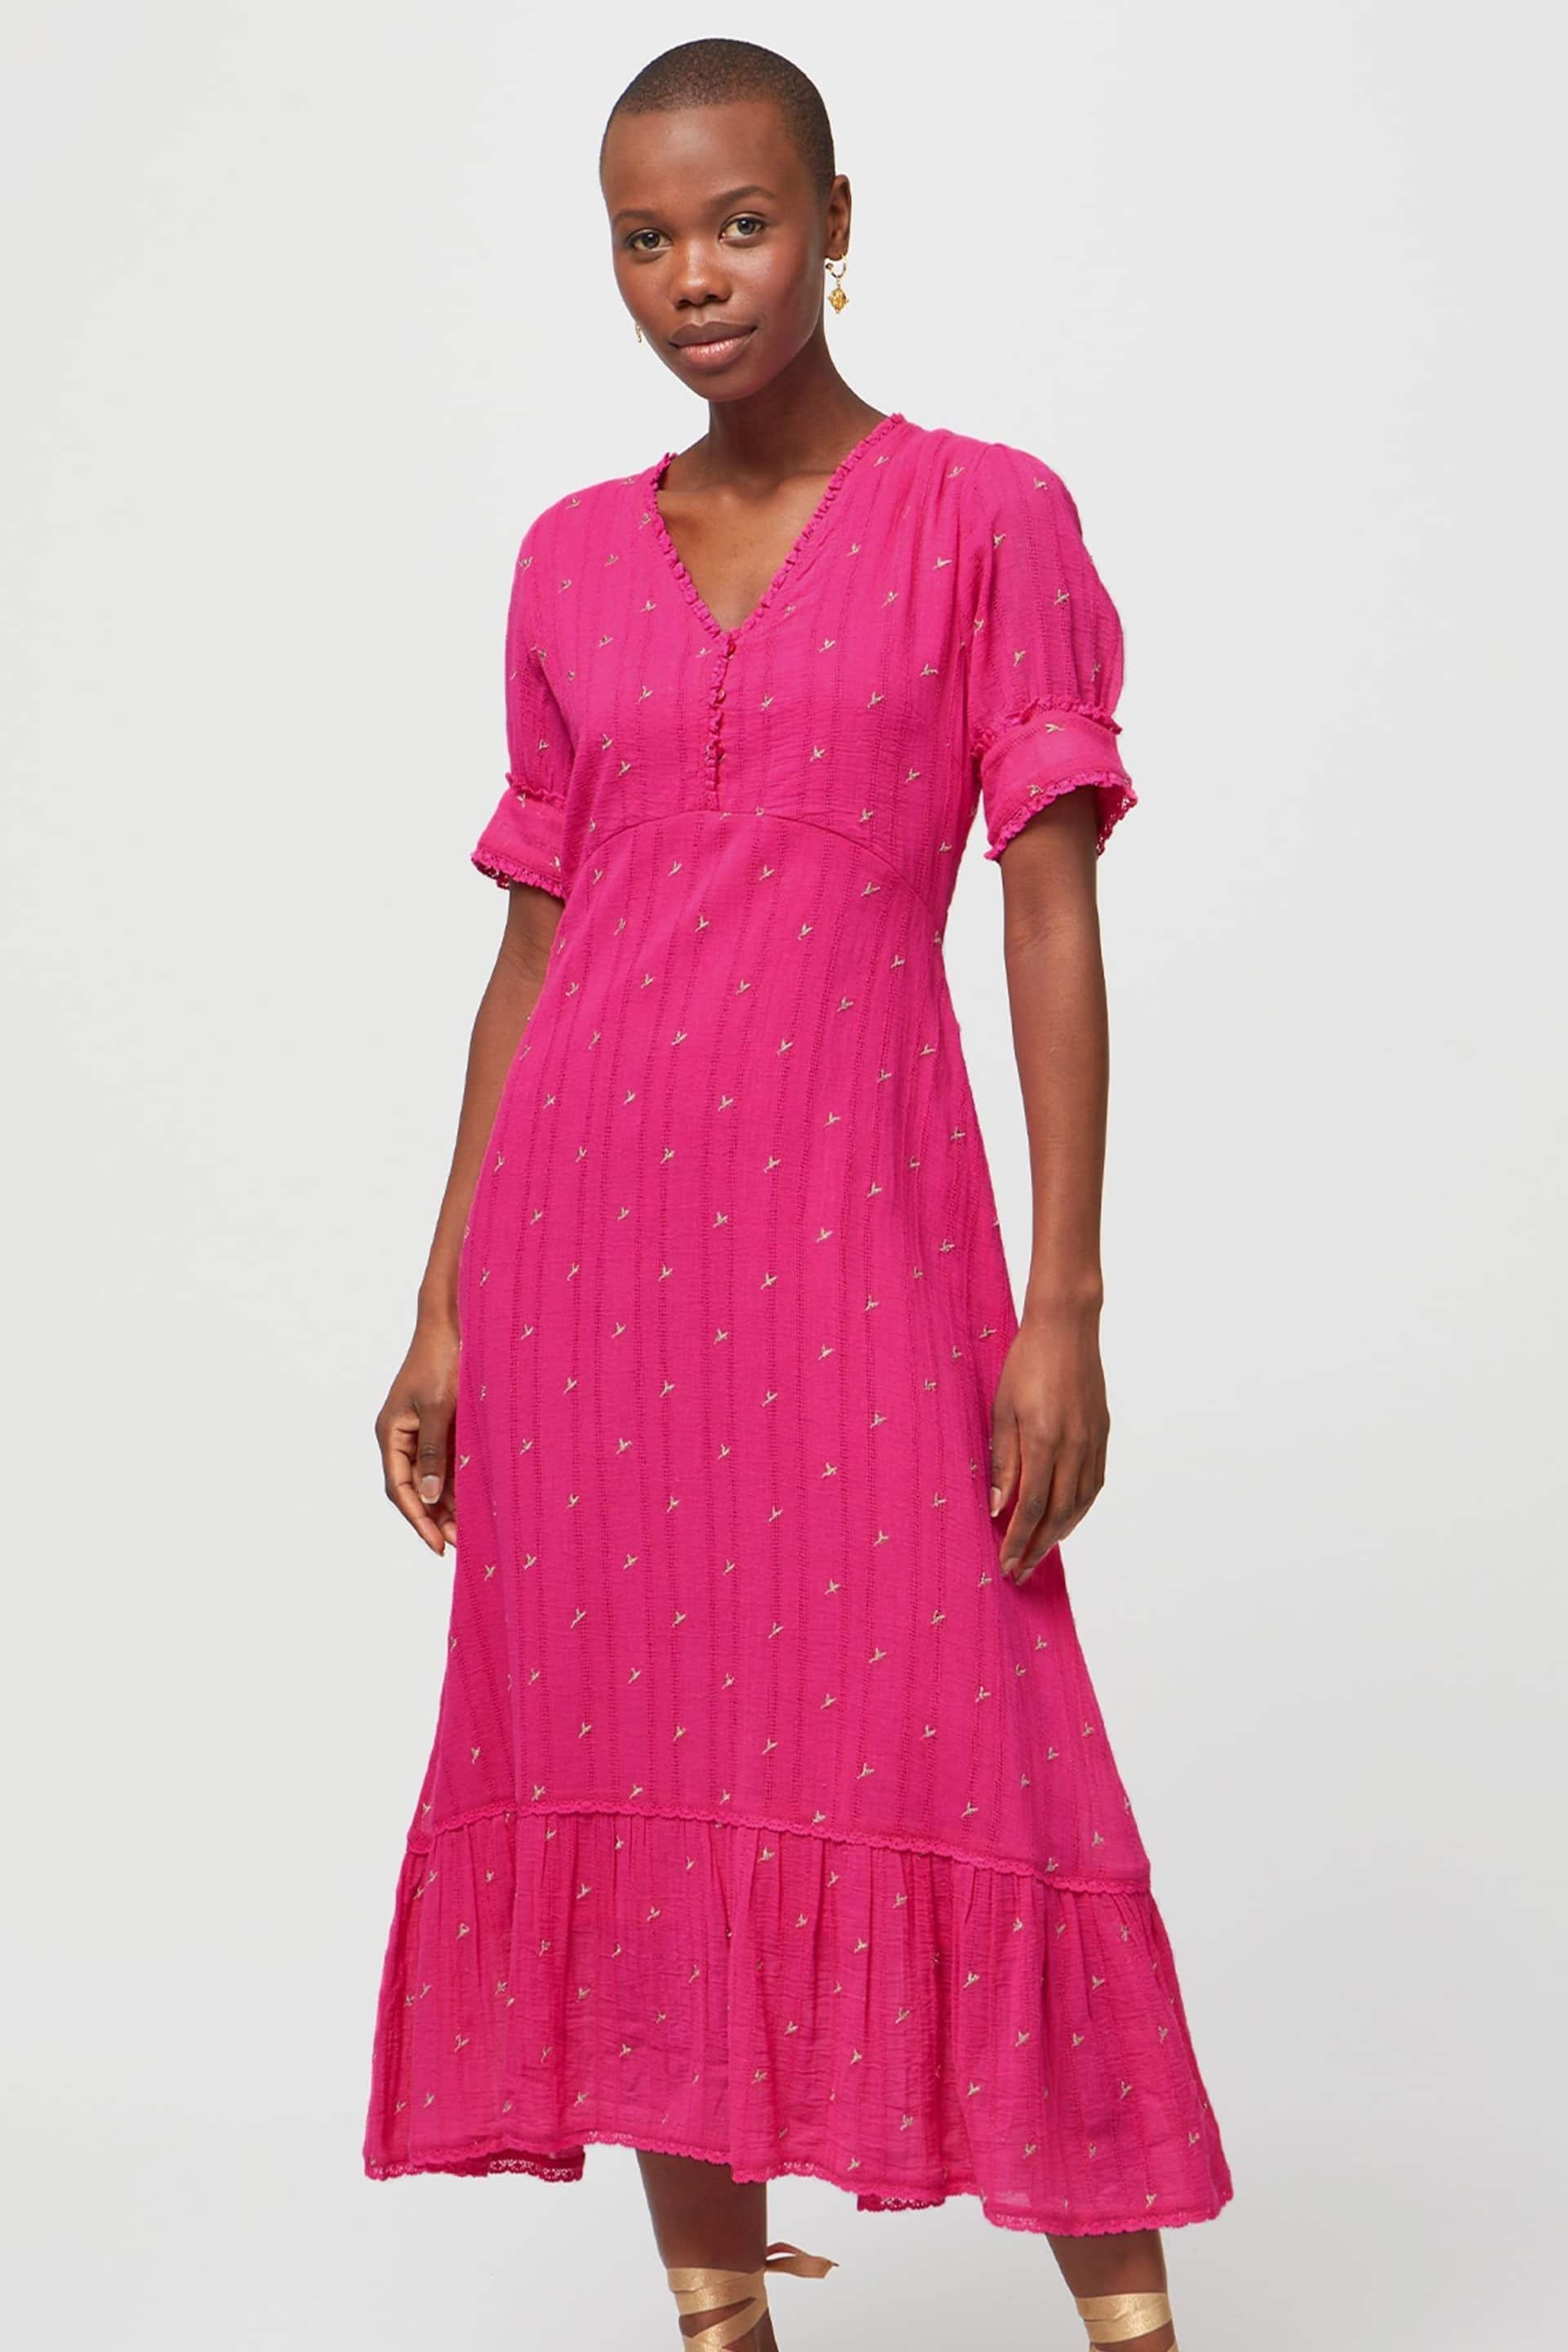 Aspiga Pink Poppy Dress - Image 1 of 6